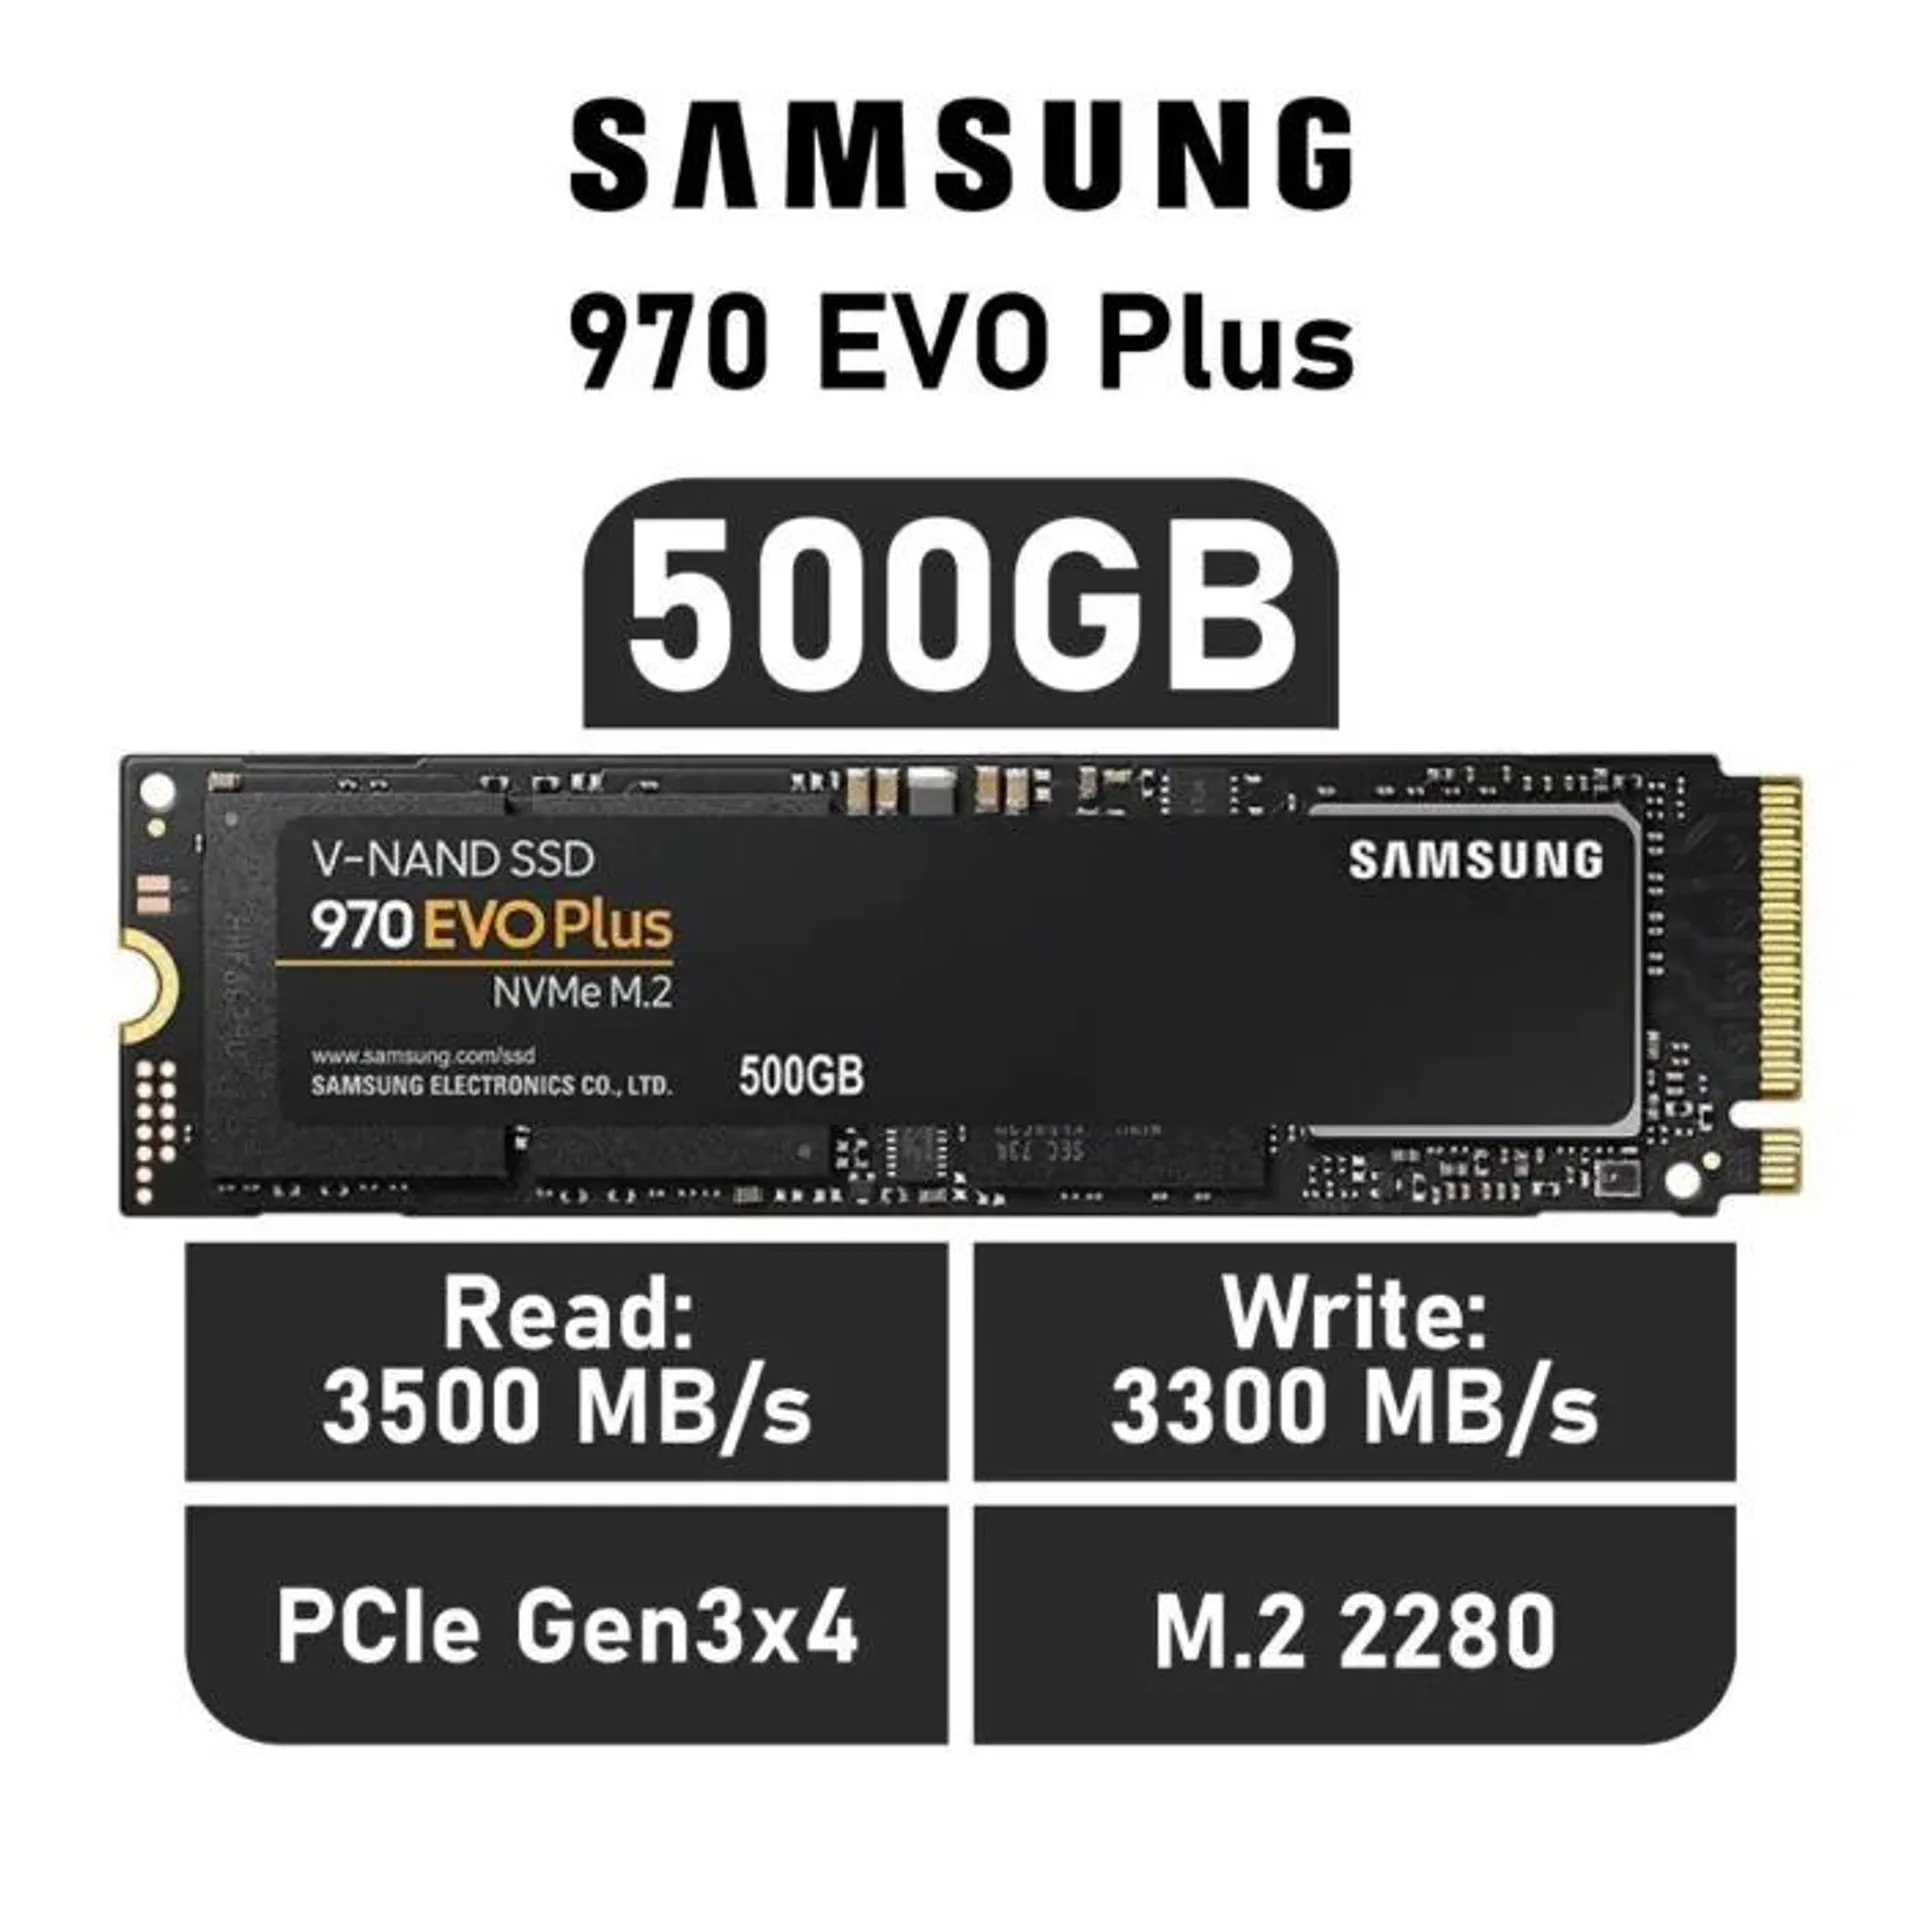 Samsung 970 EVO Plus 500GB PCIe Gen3x4 MZ-V7S500BW M.2 2280 Solid State Drive